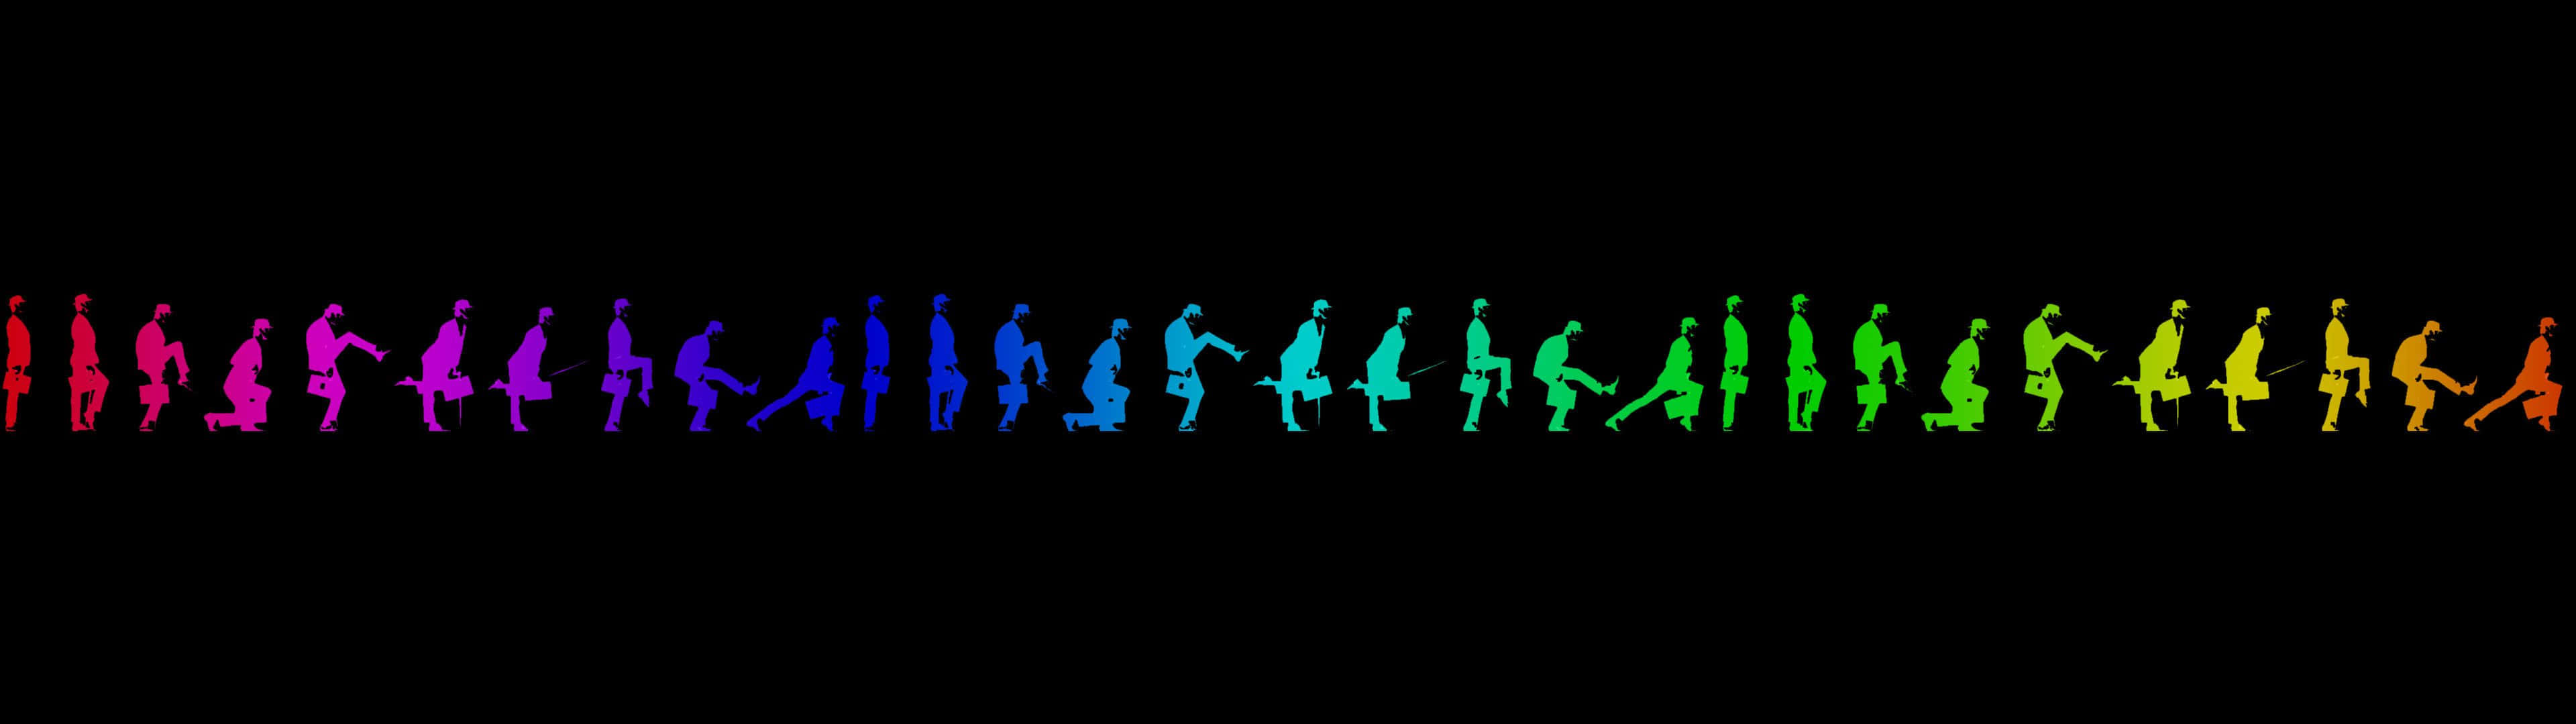 Rainbow Walking Person Dark Triple Monitor Wallpaper